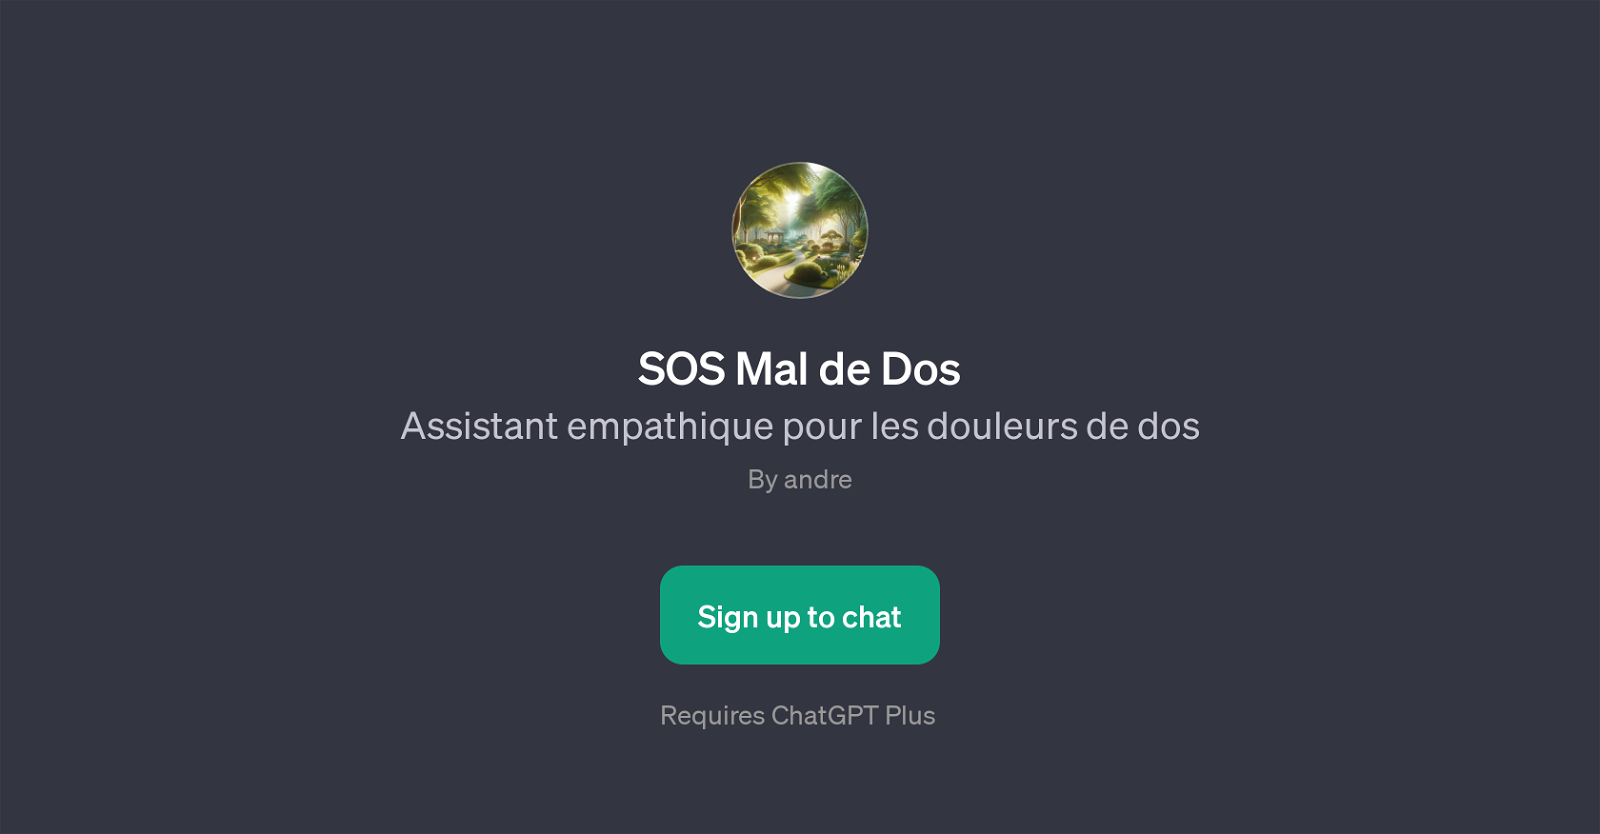 SOS Mal de Dos website